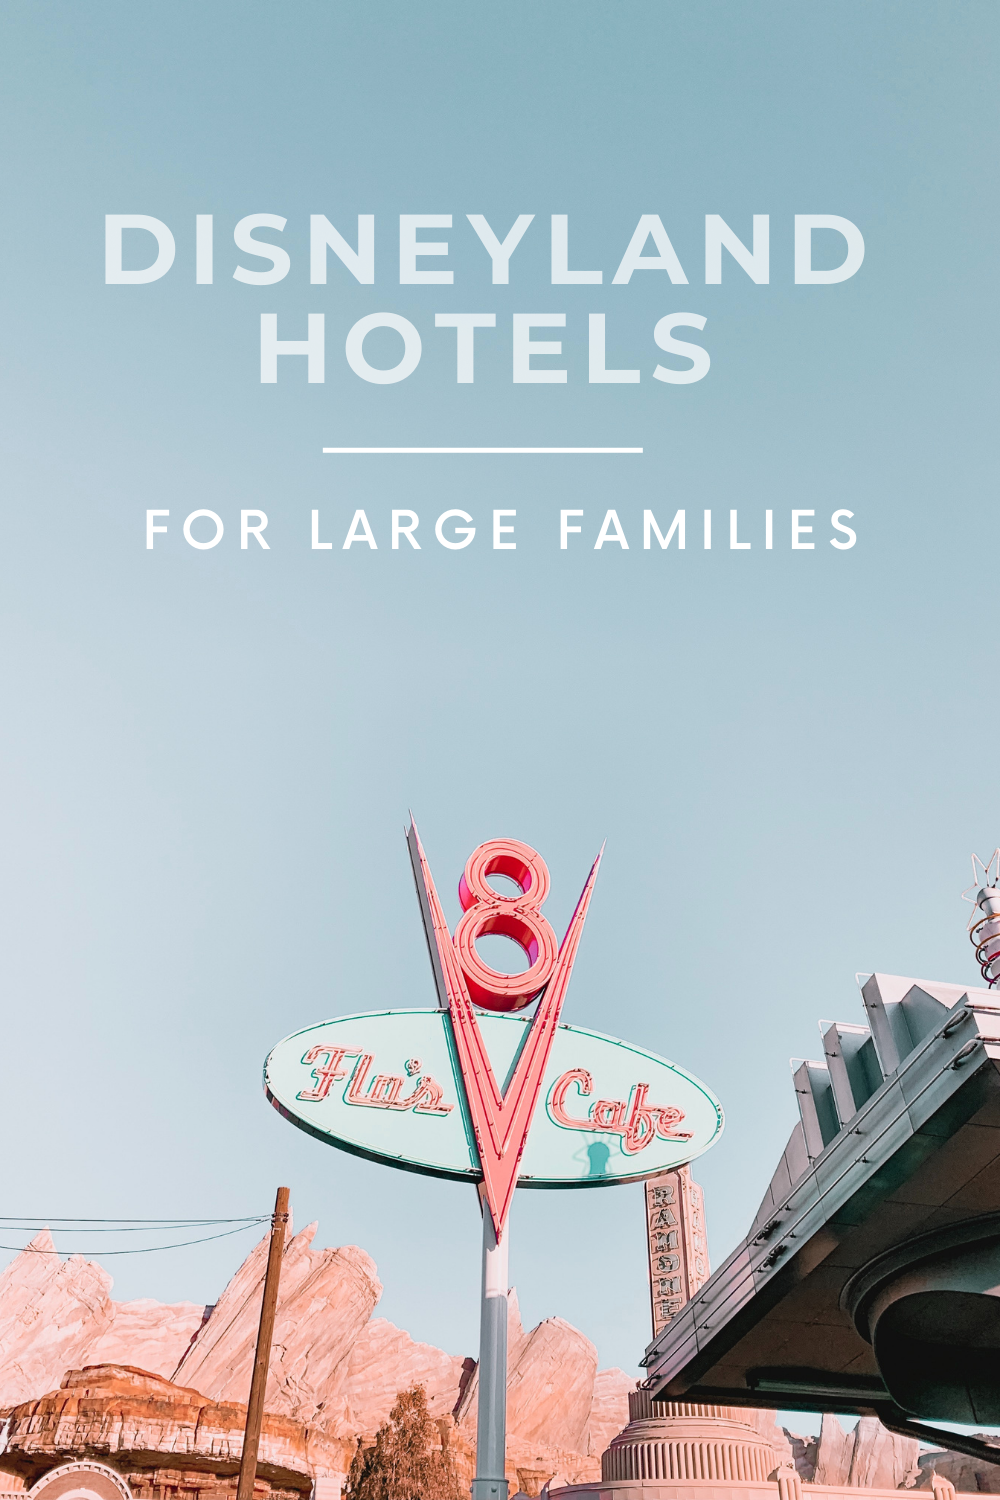 Big List of Disneyland Hotels for Large Families (Sleep 6+)